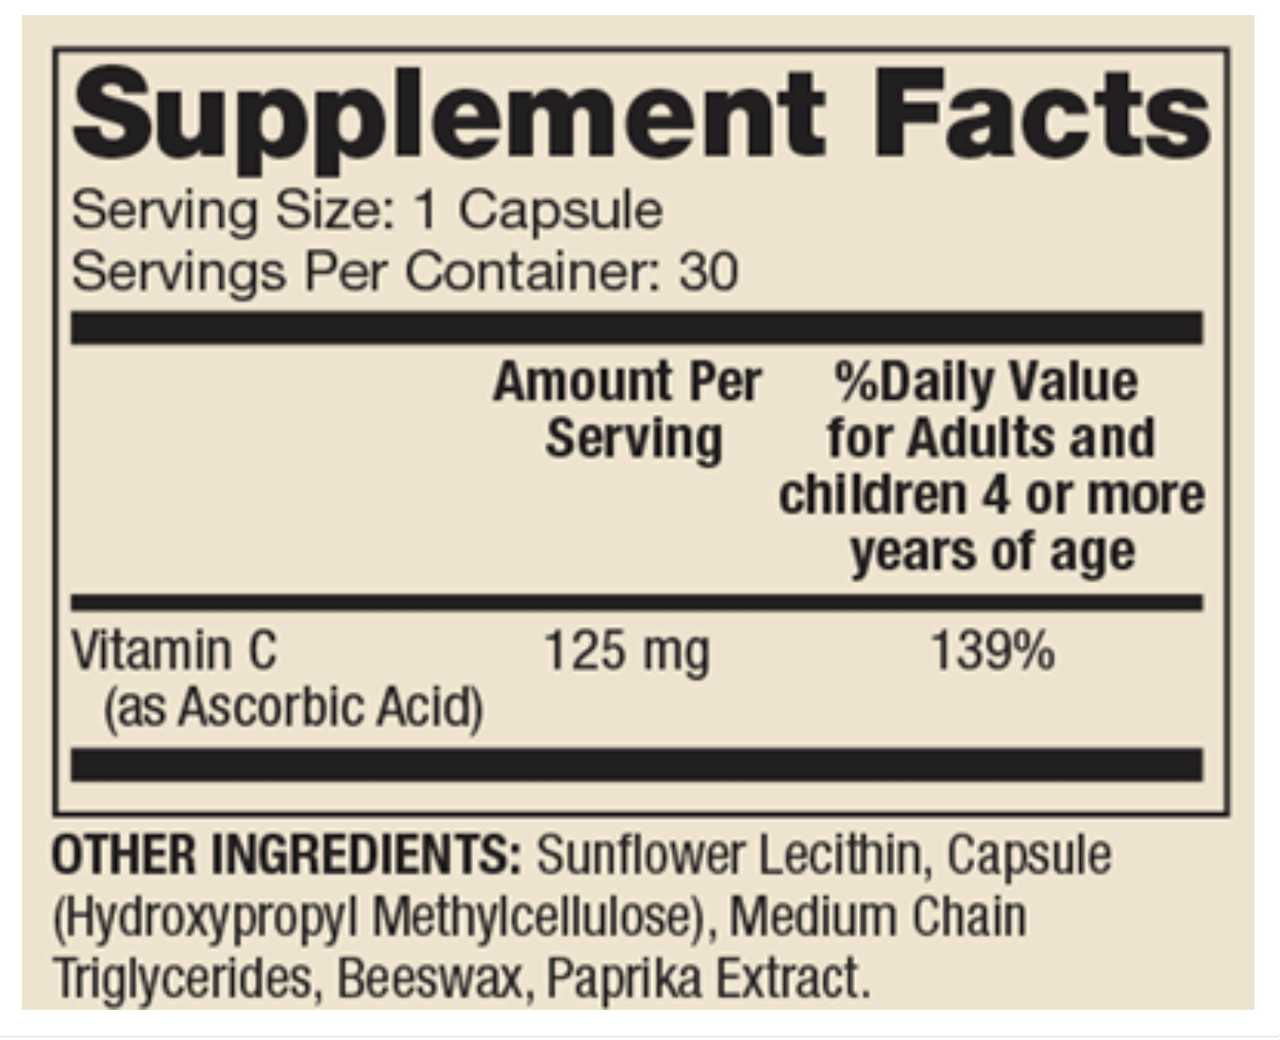 Liposomal Vitamin C for Kids - 30 Capsules Dr. Mercola Supplement - Conners Clinic